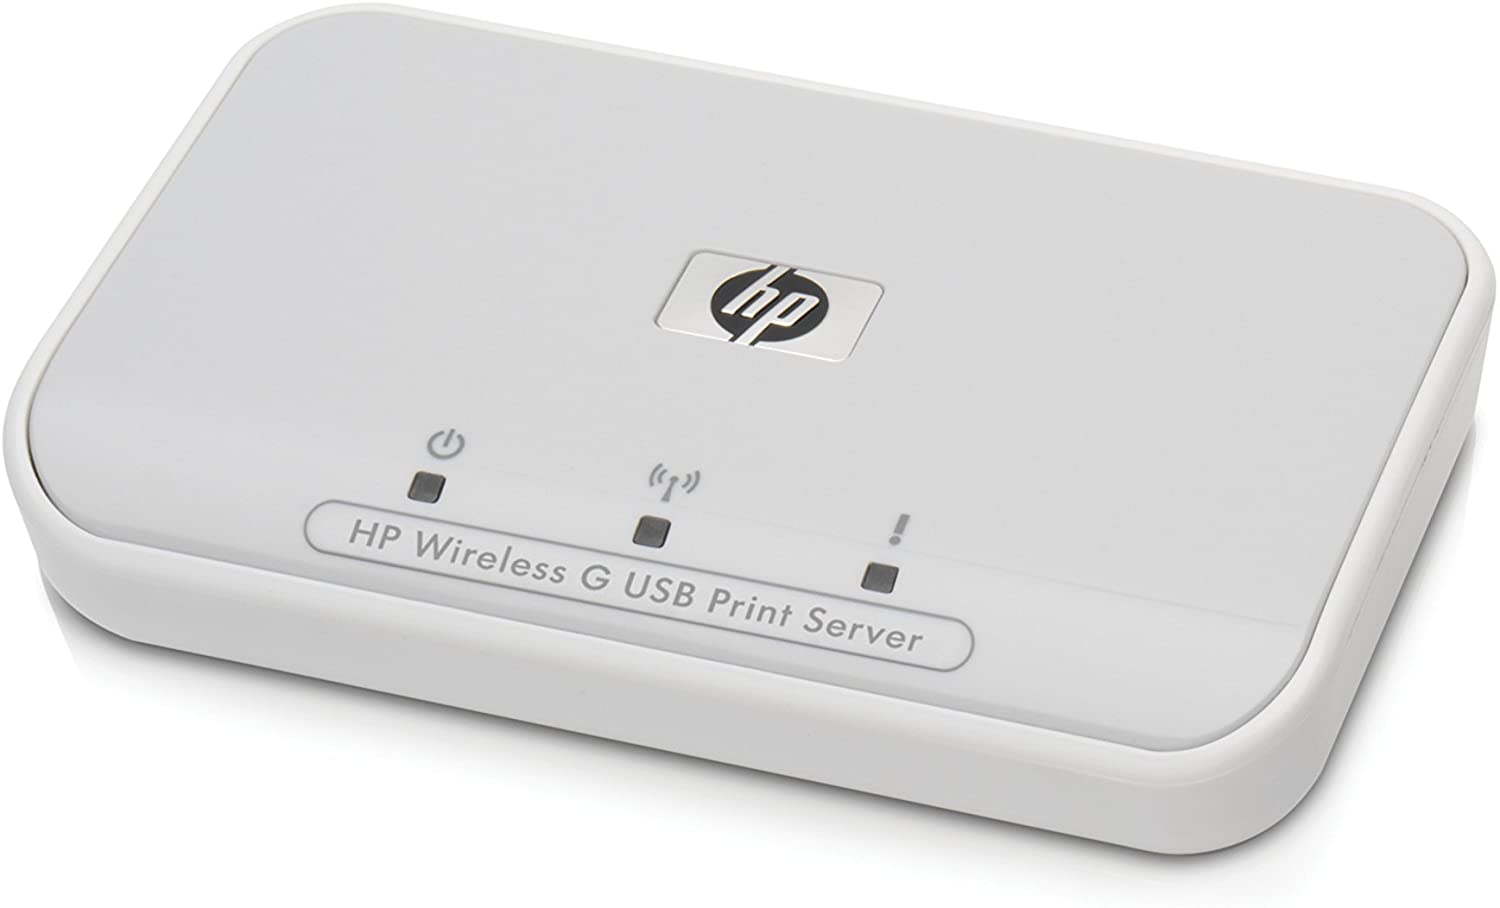 hp wireless g usb print server mac